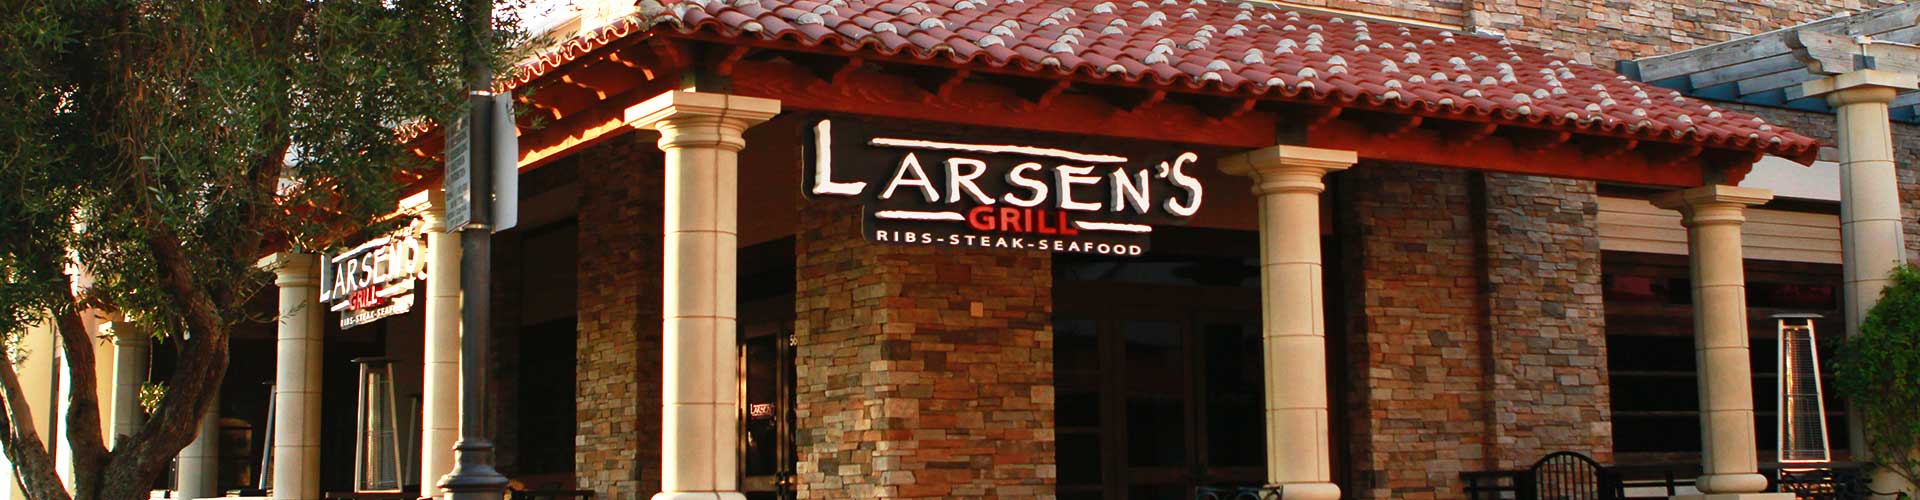 Larsen's restaurant in san diego, california.